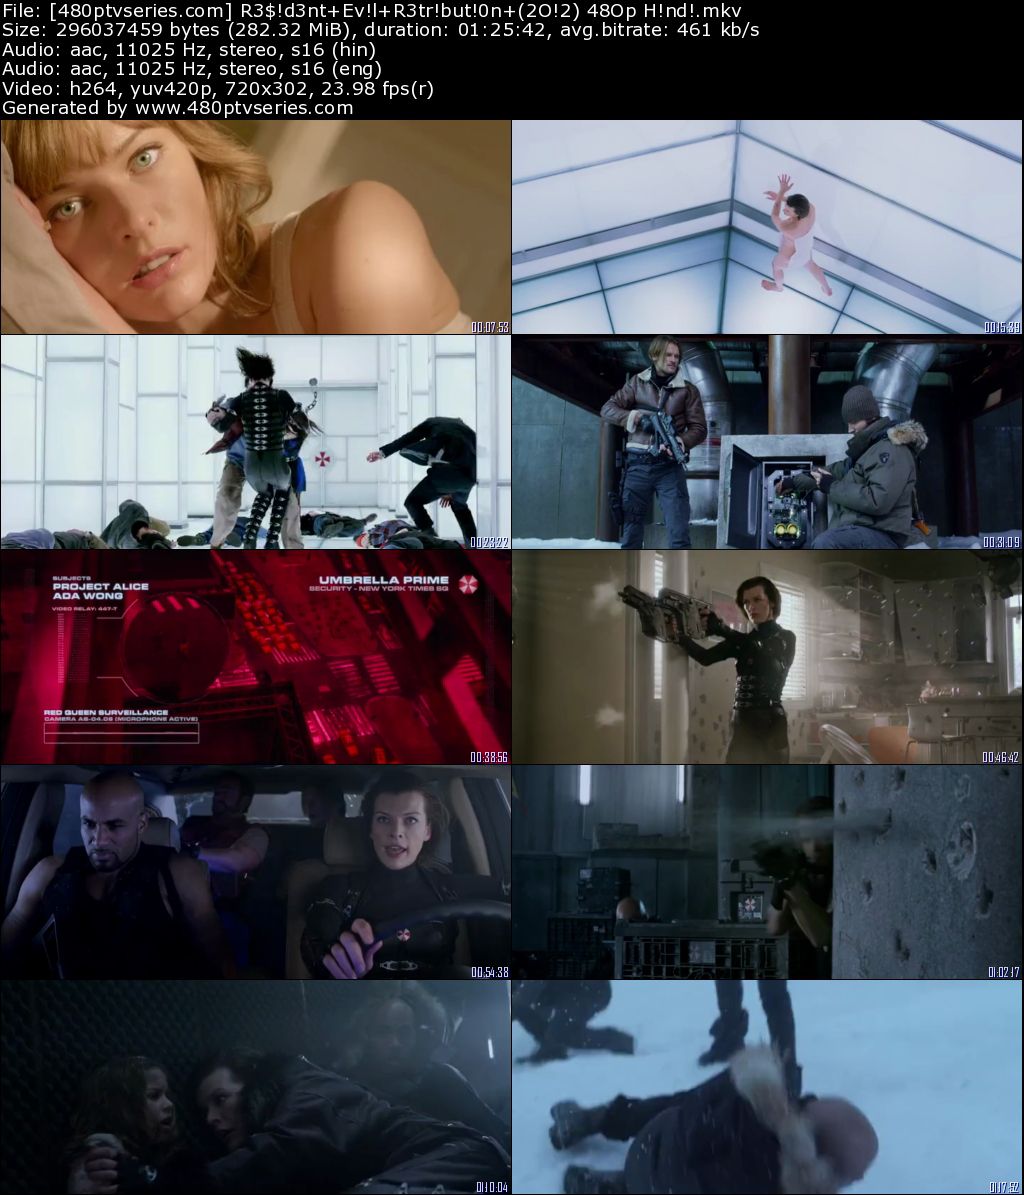 Resident Evil Retribution (2012) 300MB Full Hindi Dual Audio Movie Download 480p Bluray Free Watch Online Full Movie Download Worldfree4u 9xmovies